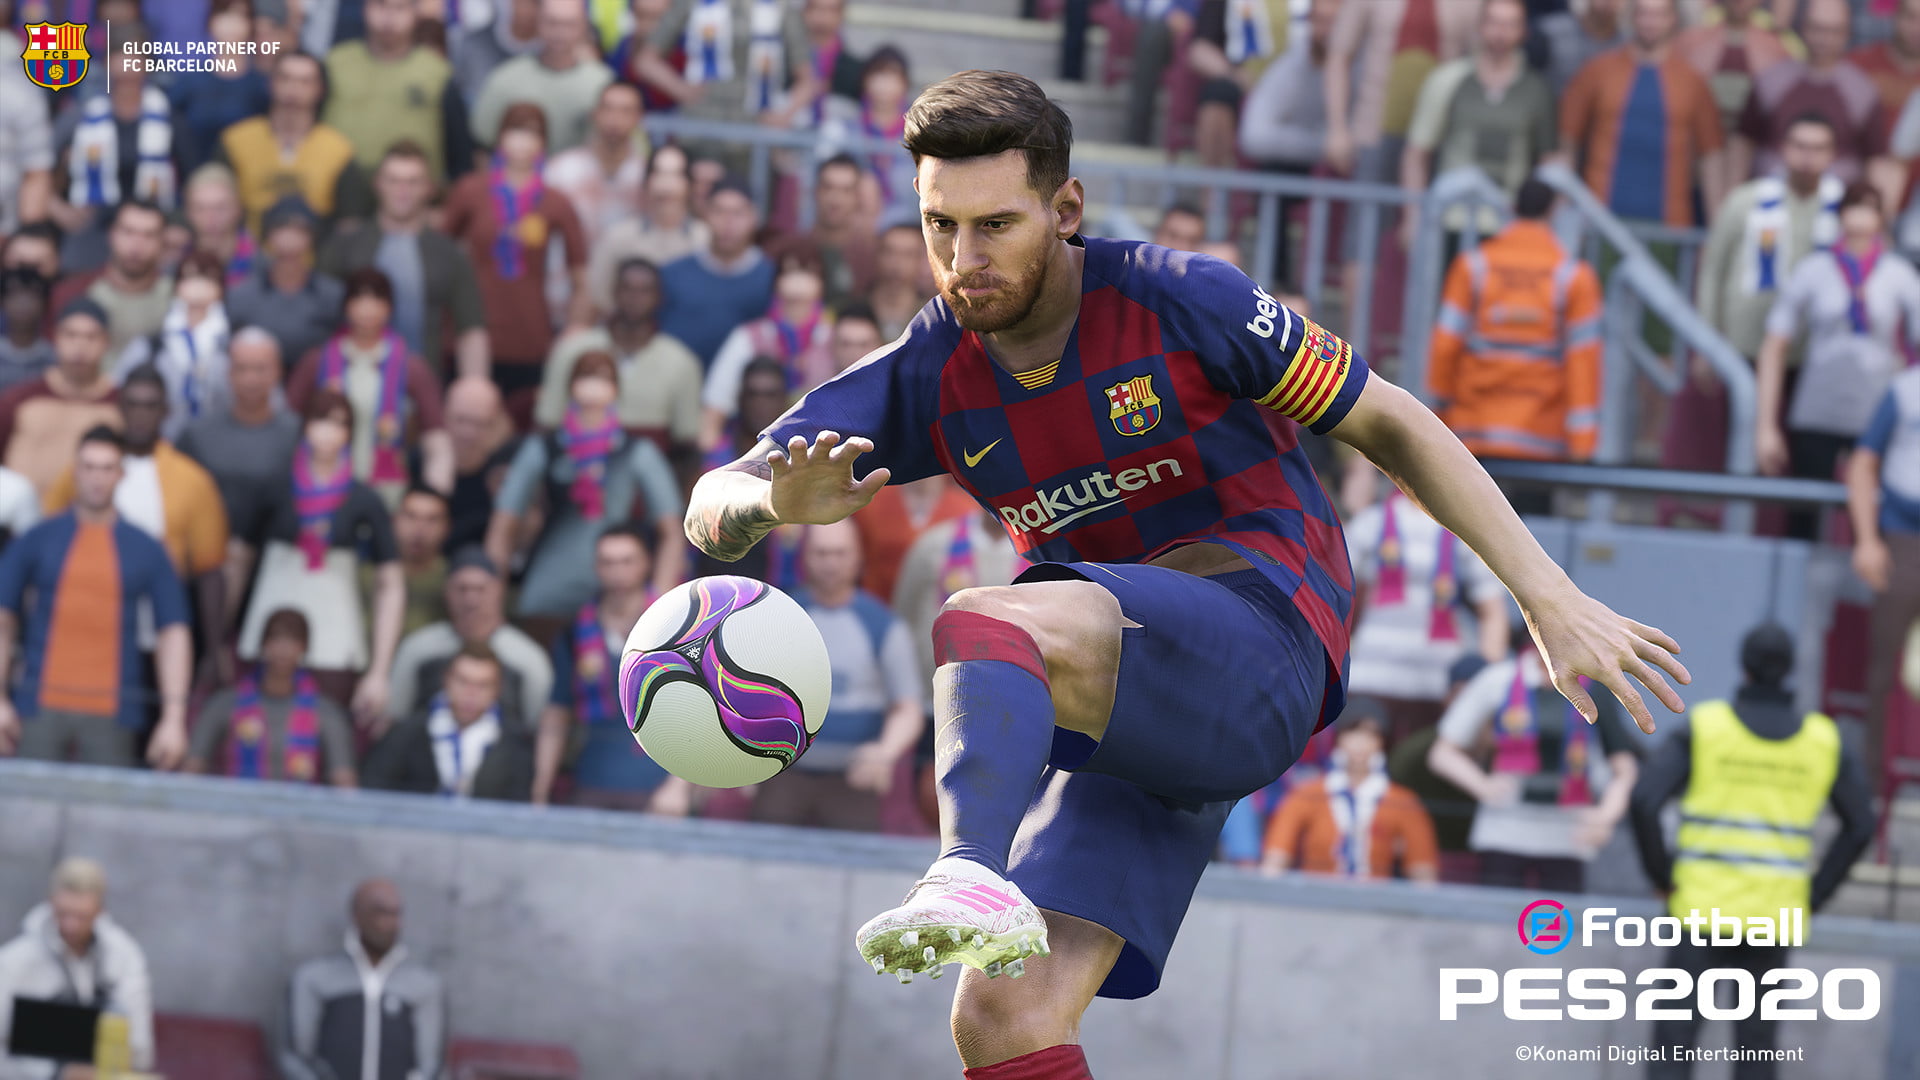 Video Game, eFootball Pro Evolution Soccer 2020, Lionel Messi